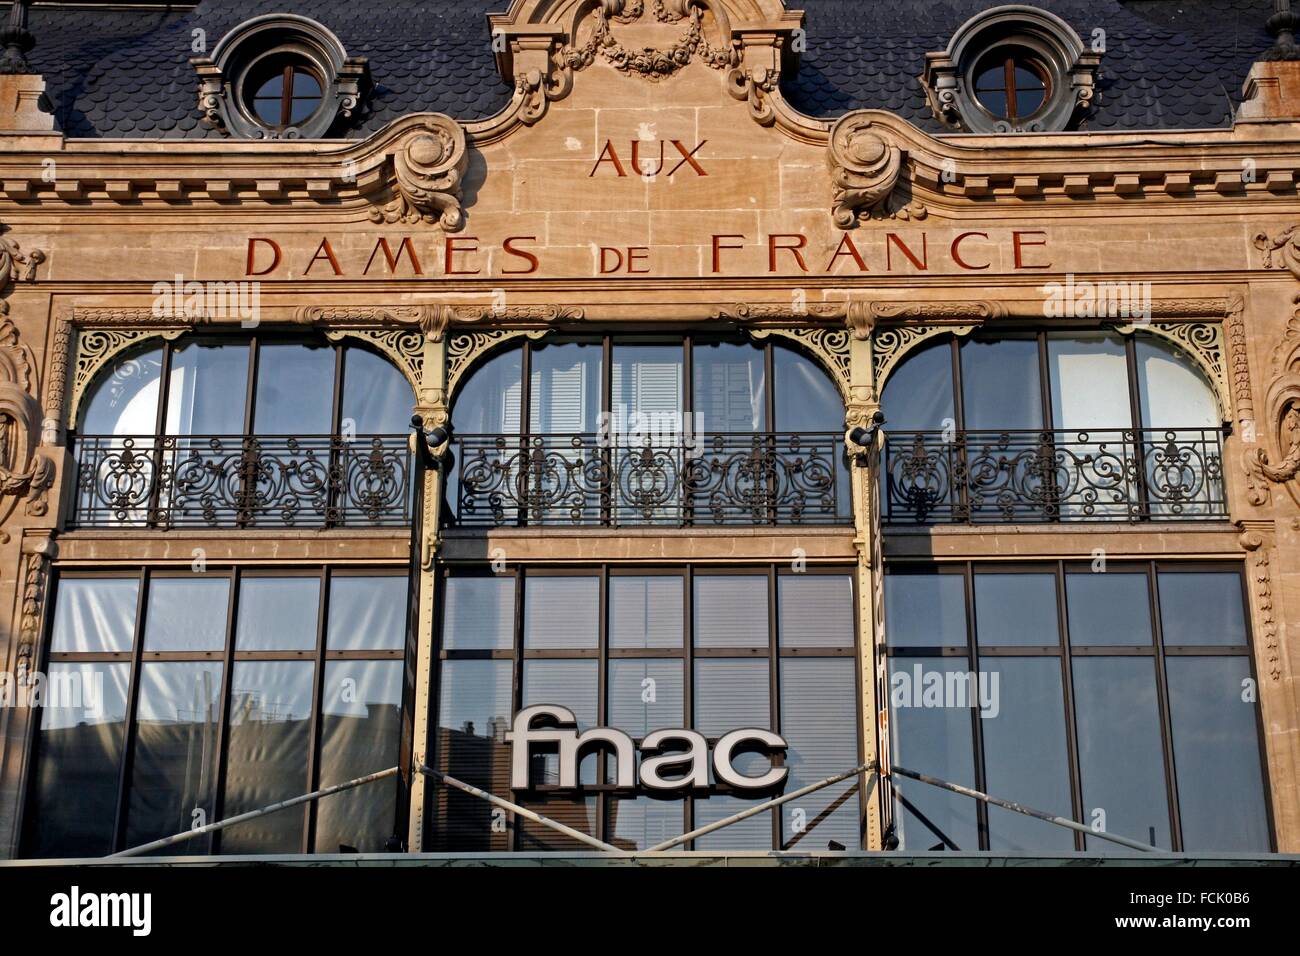 Mall, edificio Dames de France. 1905-1907, Perpignan, Francia Fotografía de Alamy